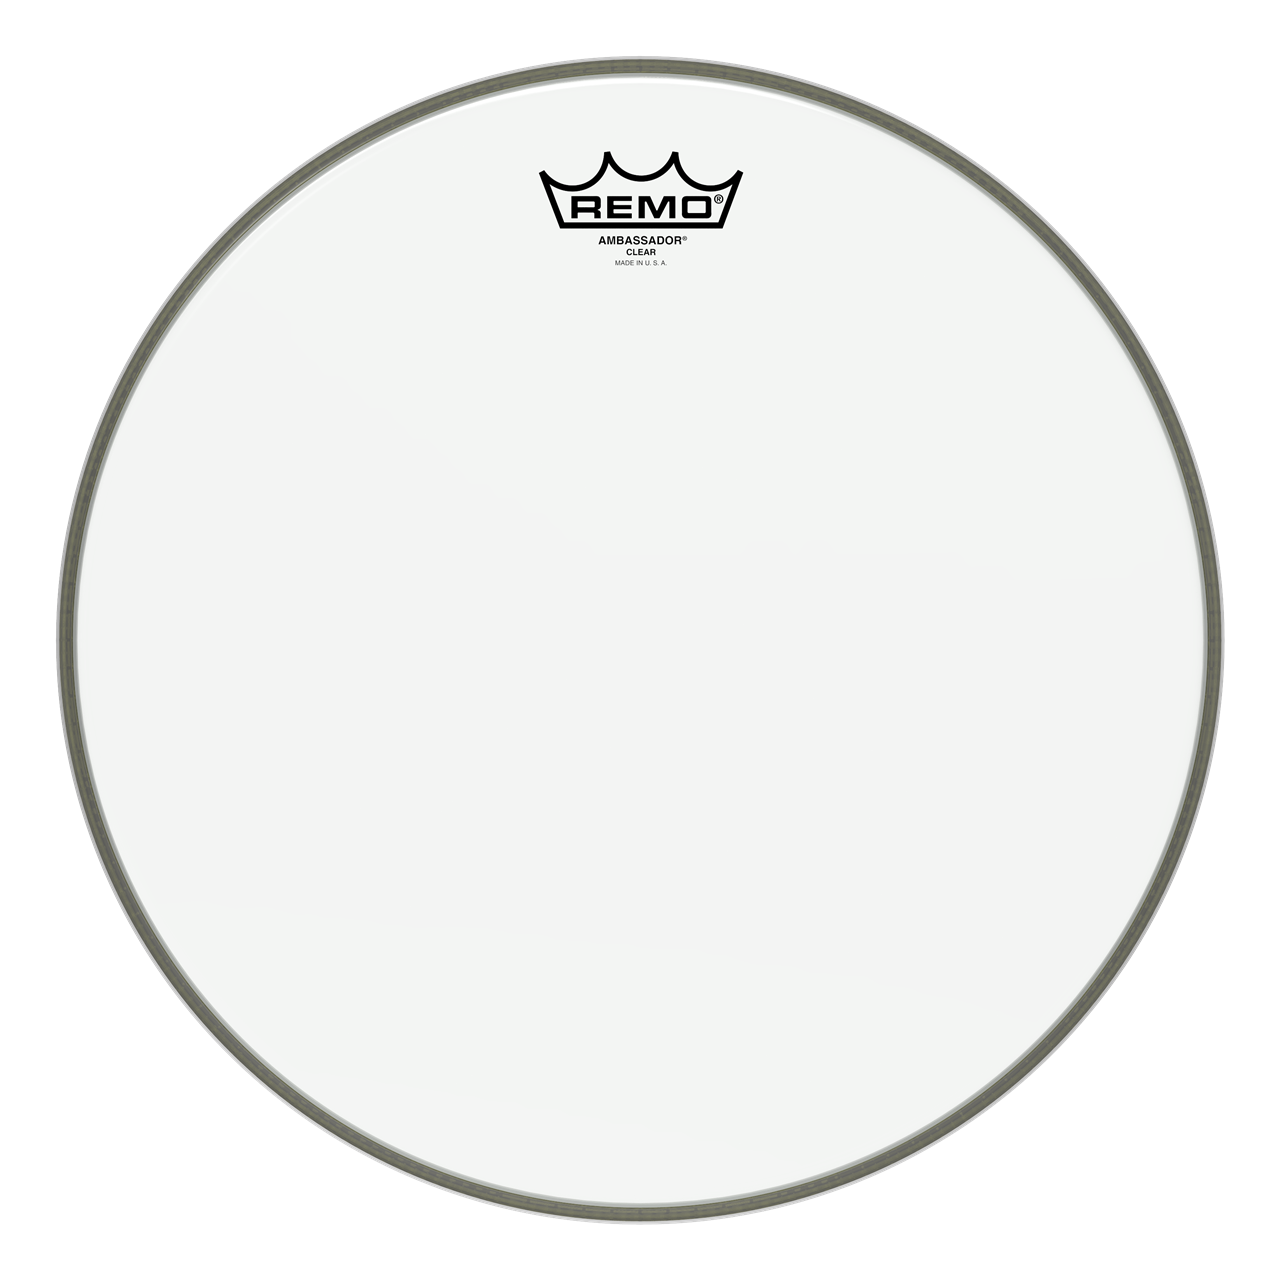 Remo BR-1318-00 Ambassador Bass Drum, 18" Clear